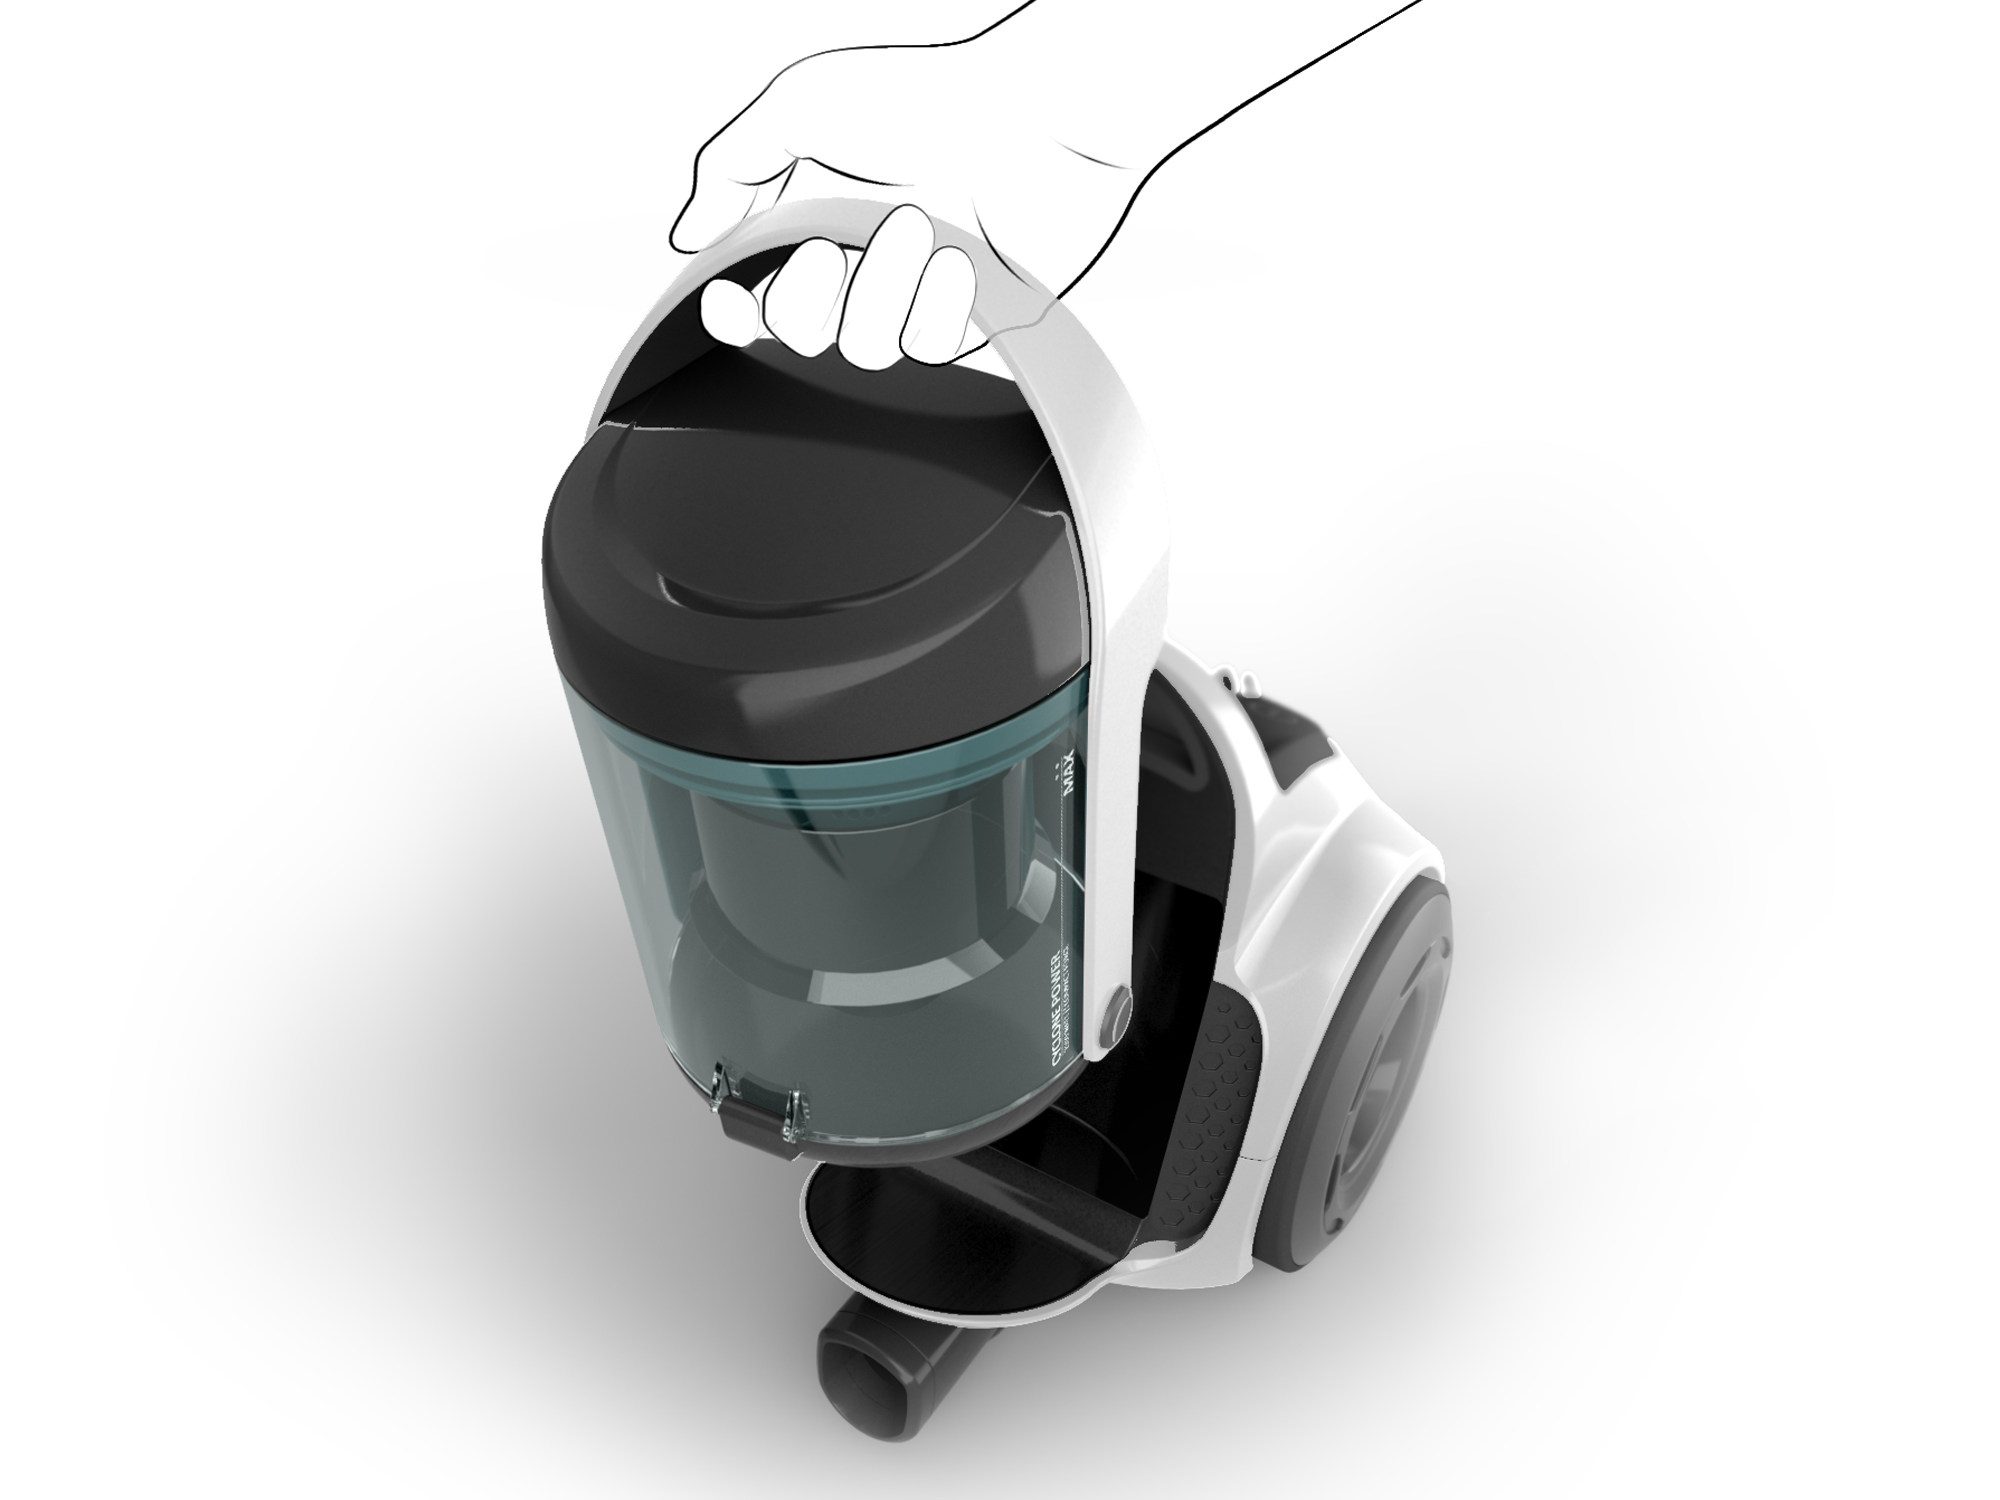 Bosch Cleann’n bagless vacuum cleaner